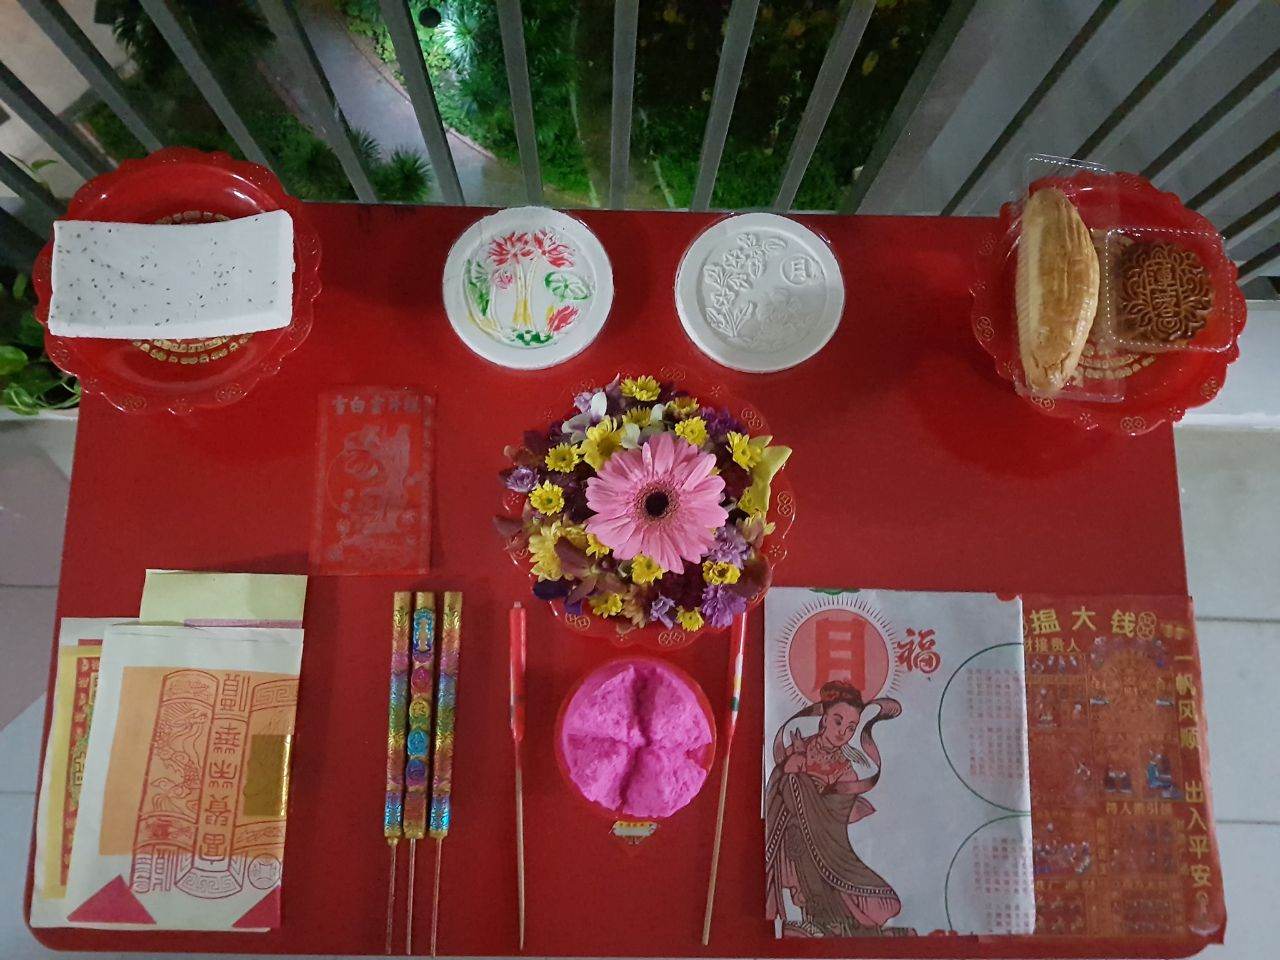 The Prayer Offerings & Prayer Items of goddess tai yin. , photo by fb. 林金伟 25 09 2018.